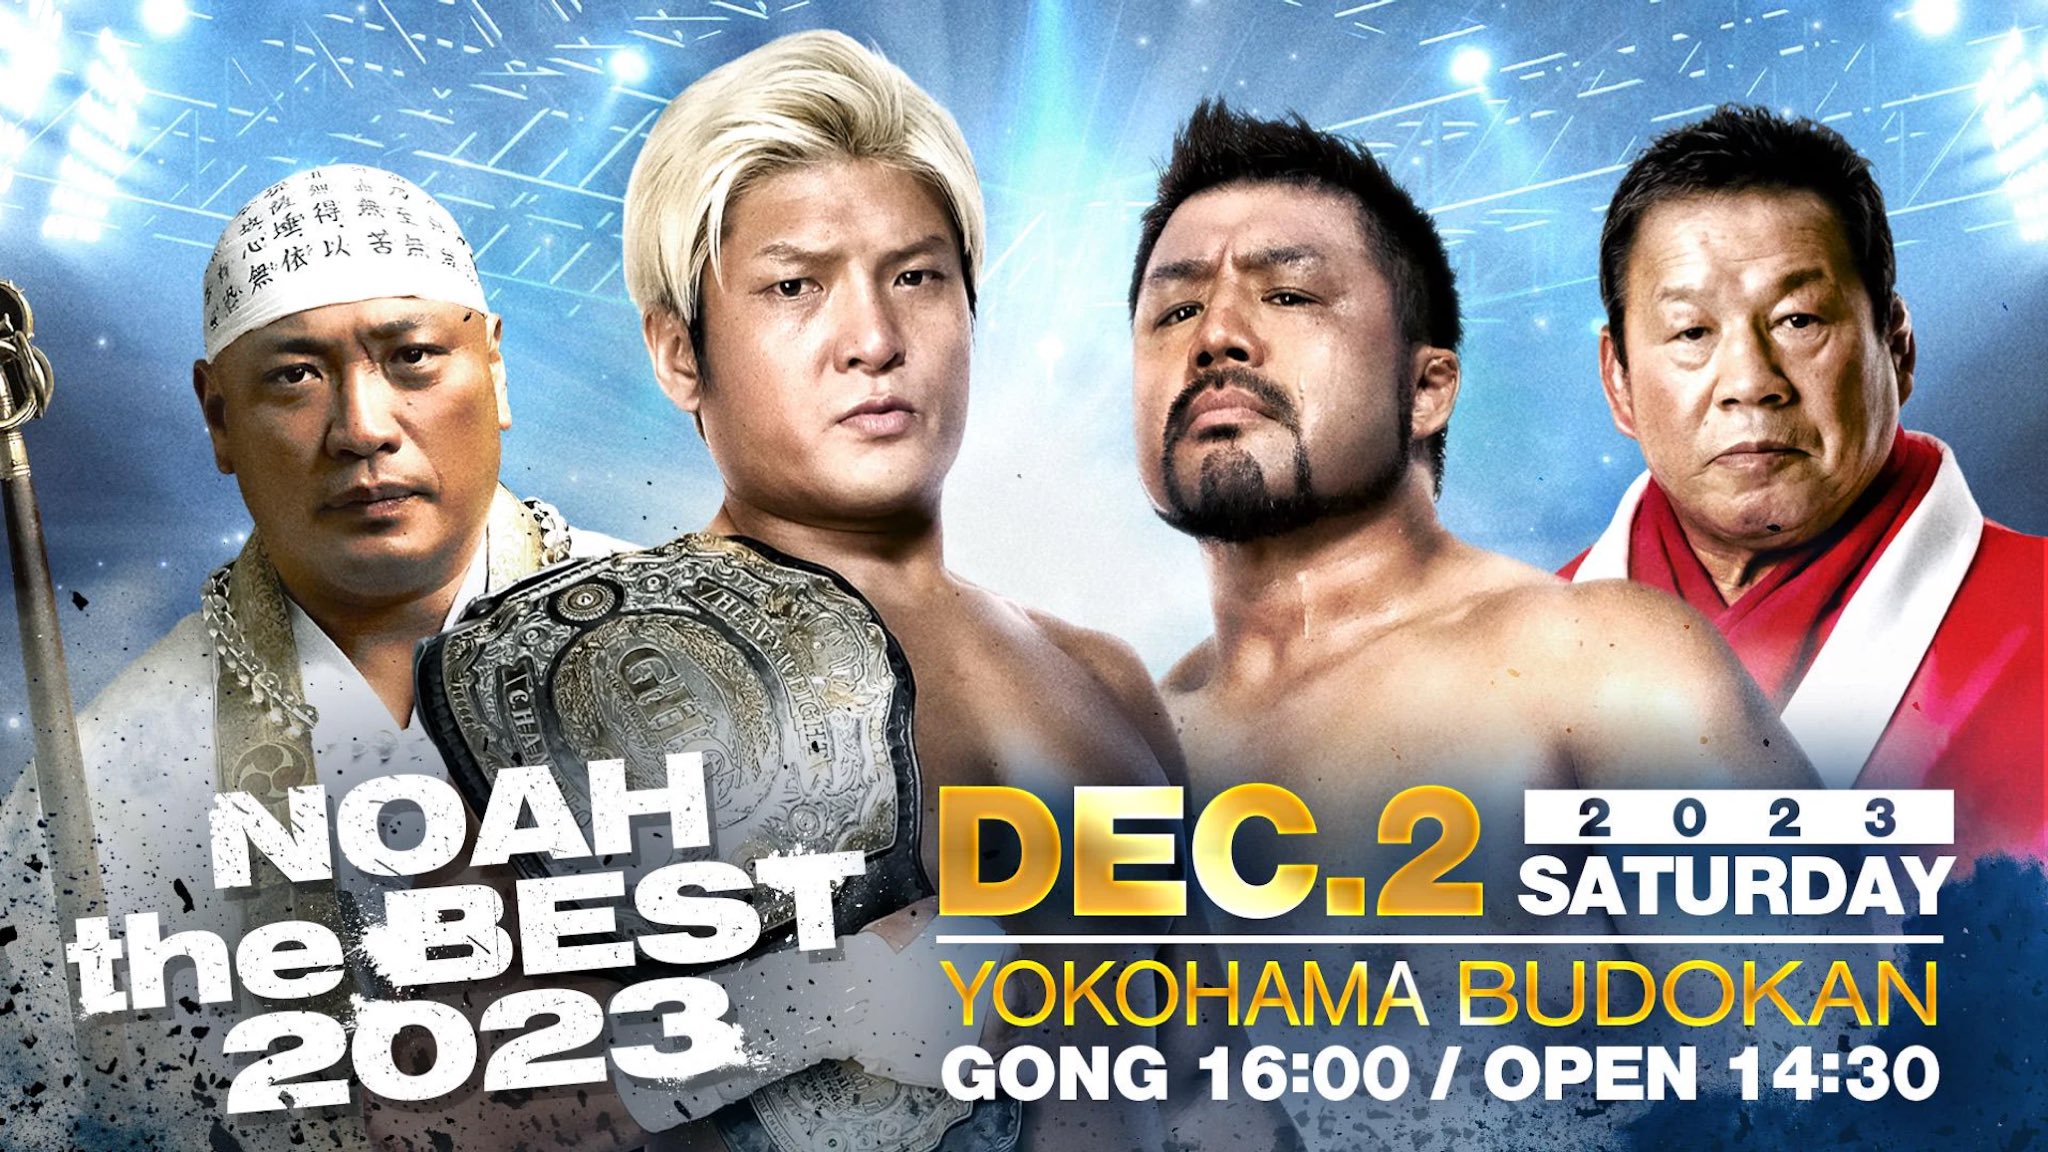 Pro Wrestling NOAH's "NOAH the Best" 2023 event poster.